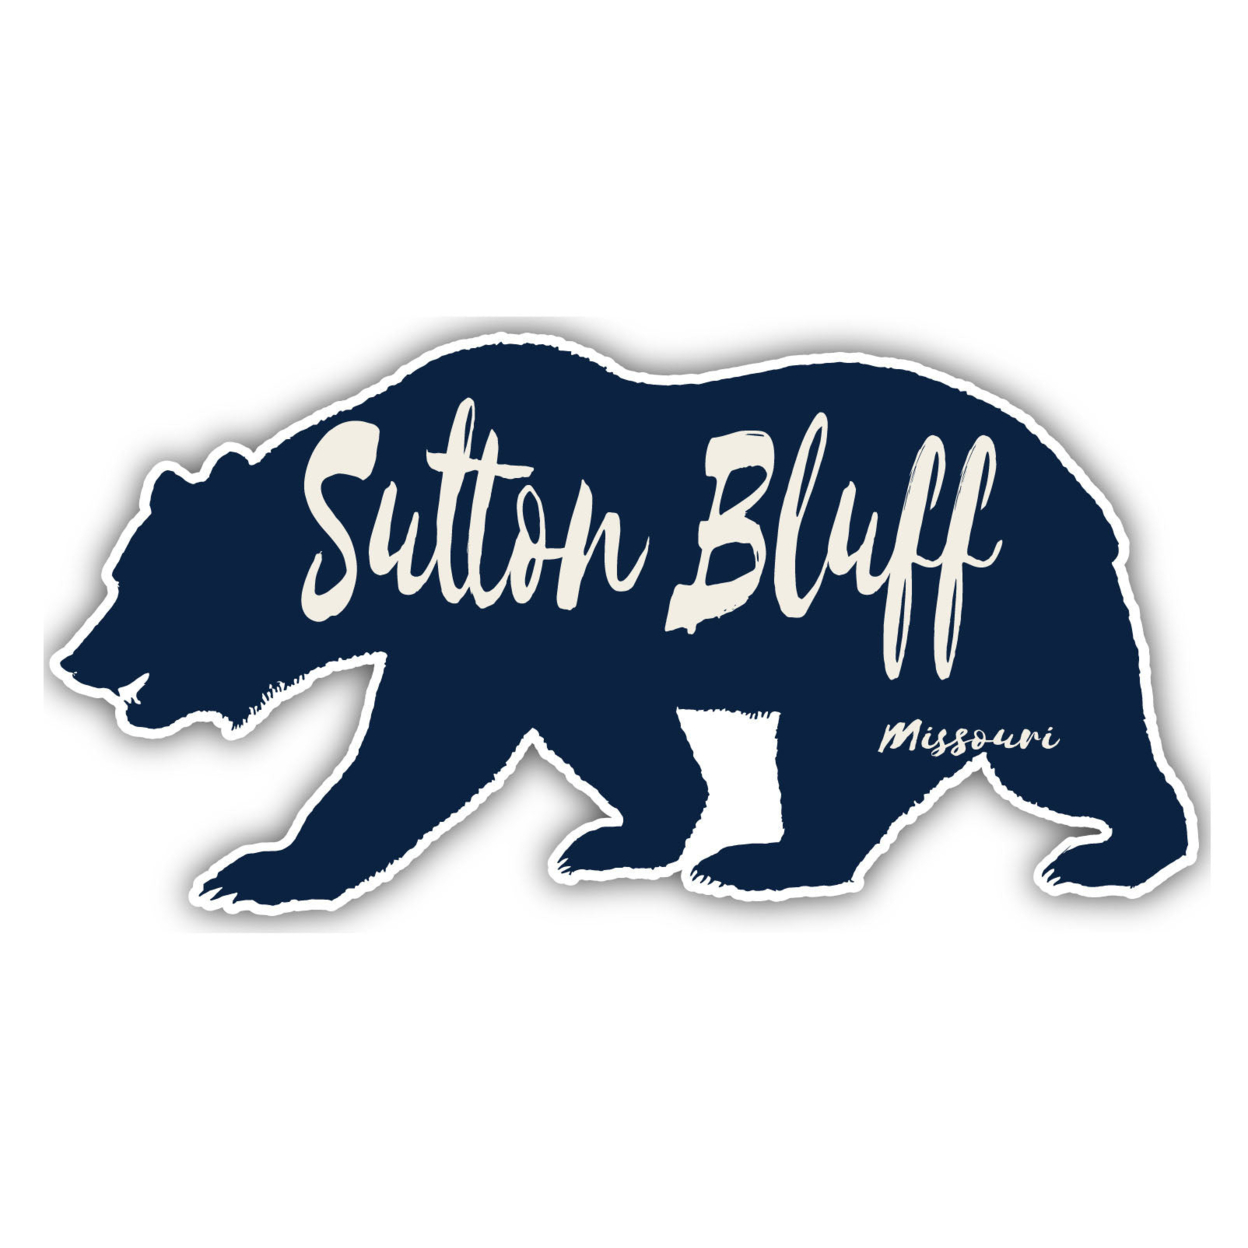 Sutton Bluff Missouri Souvenir Decorative Stickers (Choose Theme And Size) - Single Unit, 2-Inch, Bear